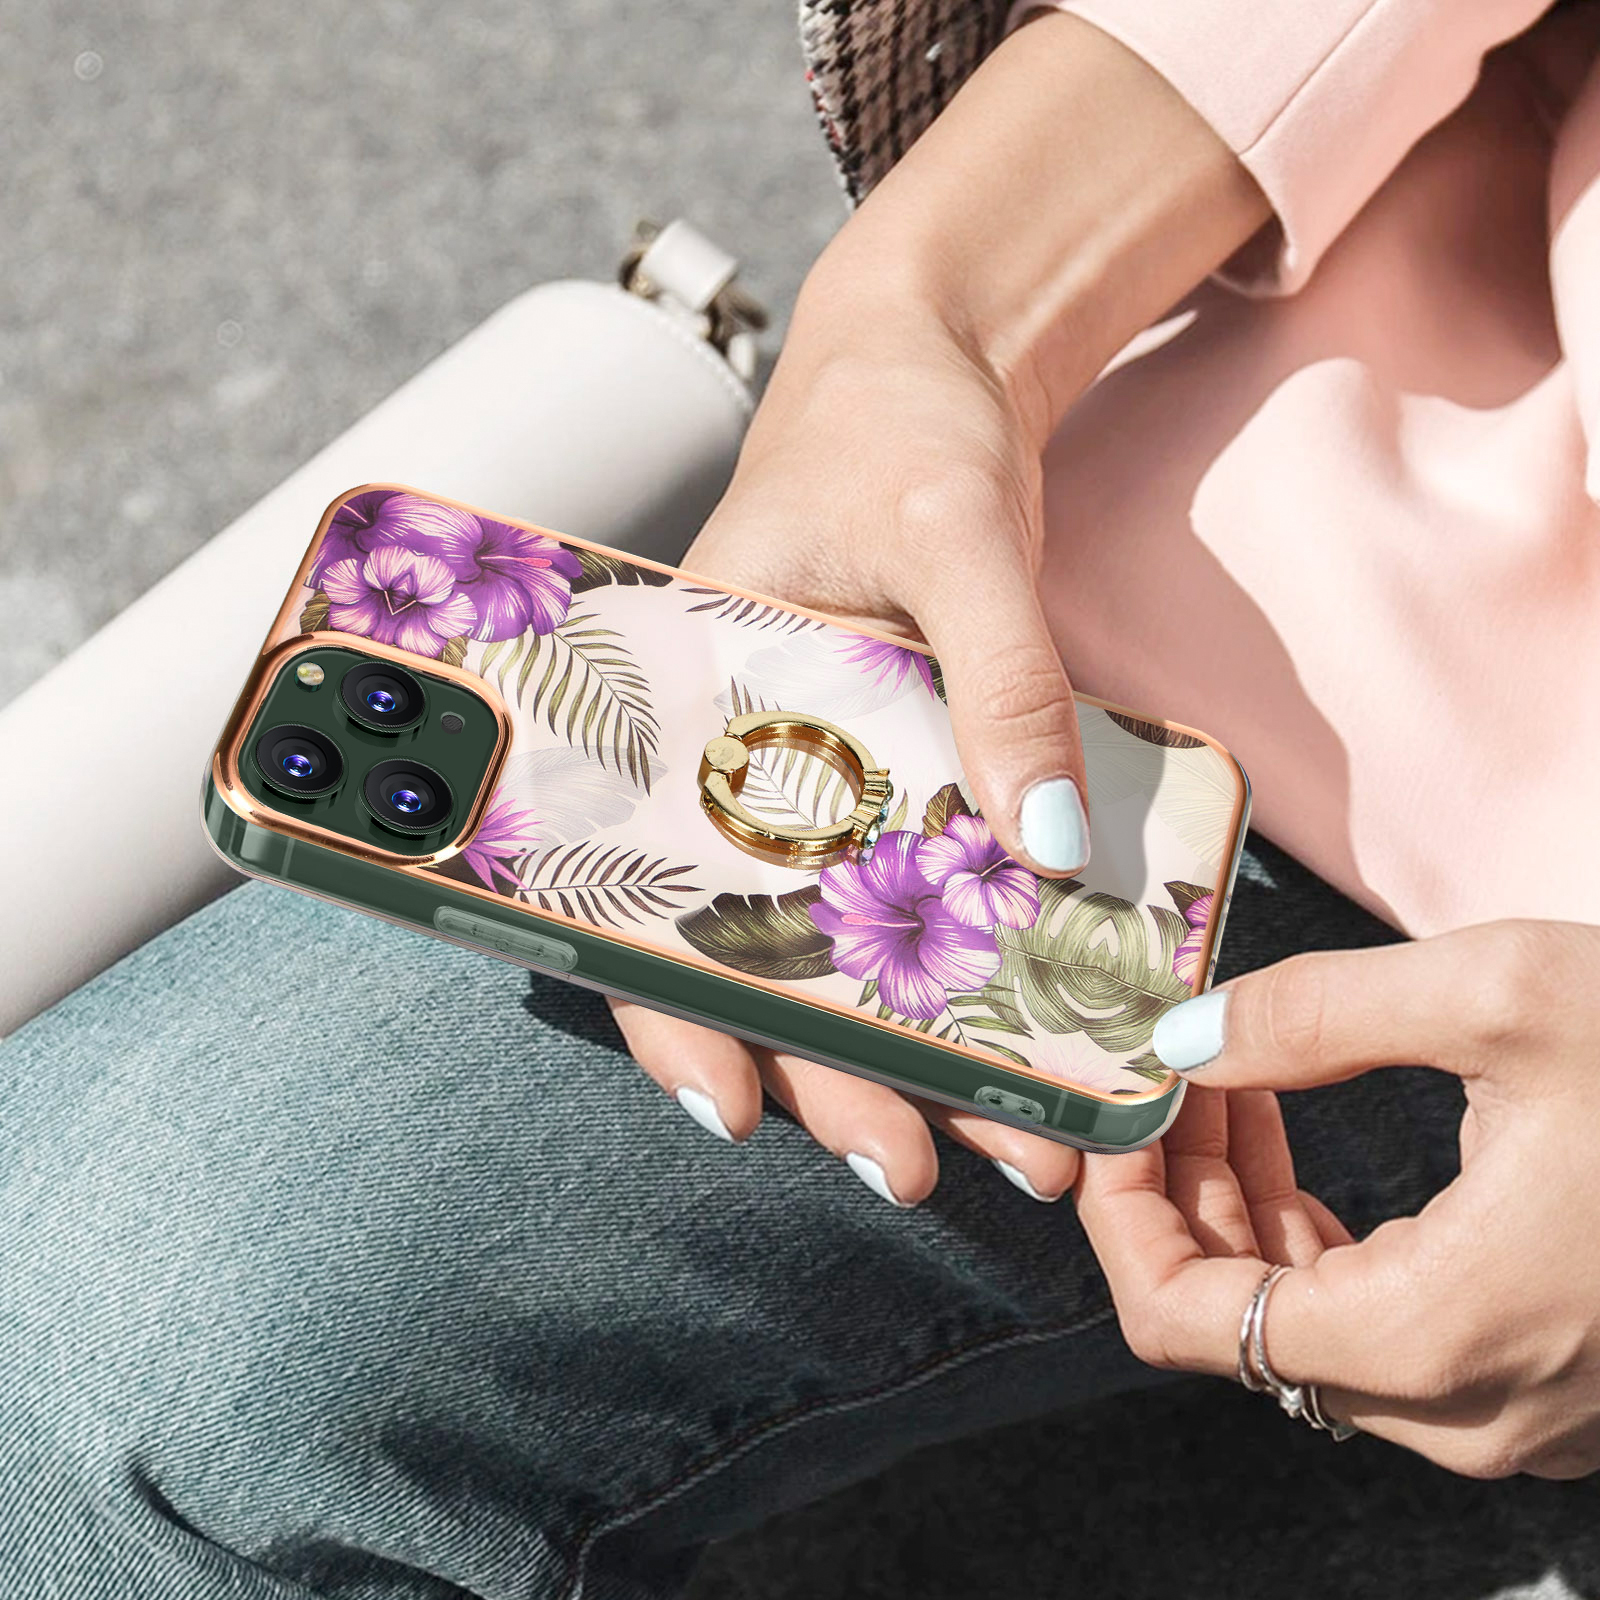 AVIZAR Blumen Series, 11 Apple, Violett Pro, iPhone Backcover